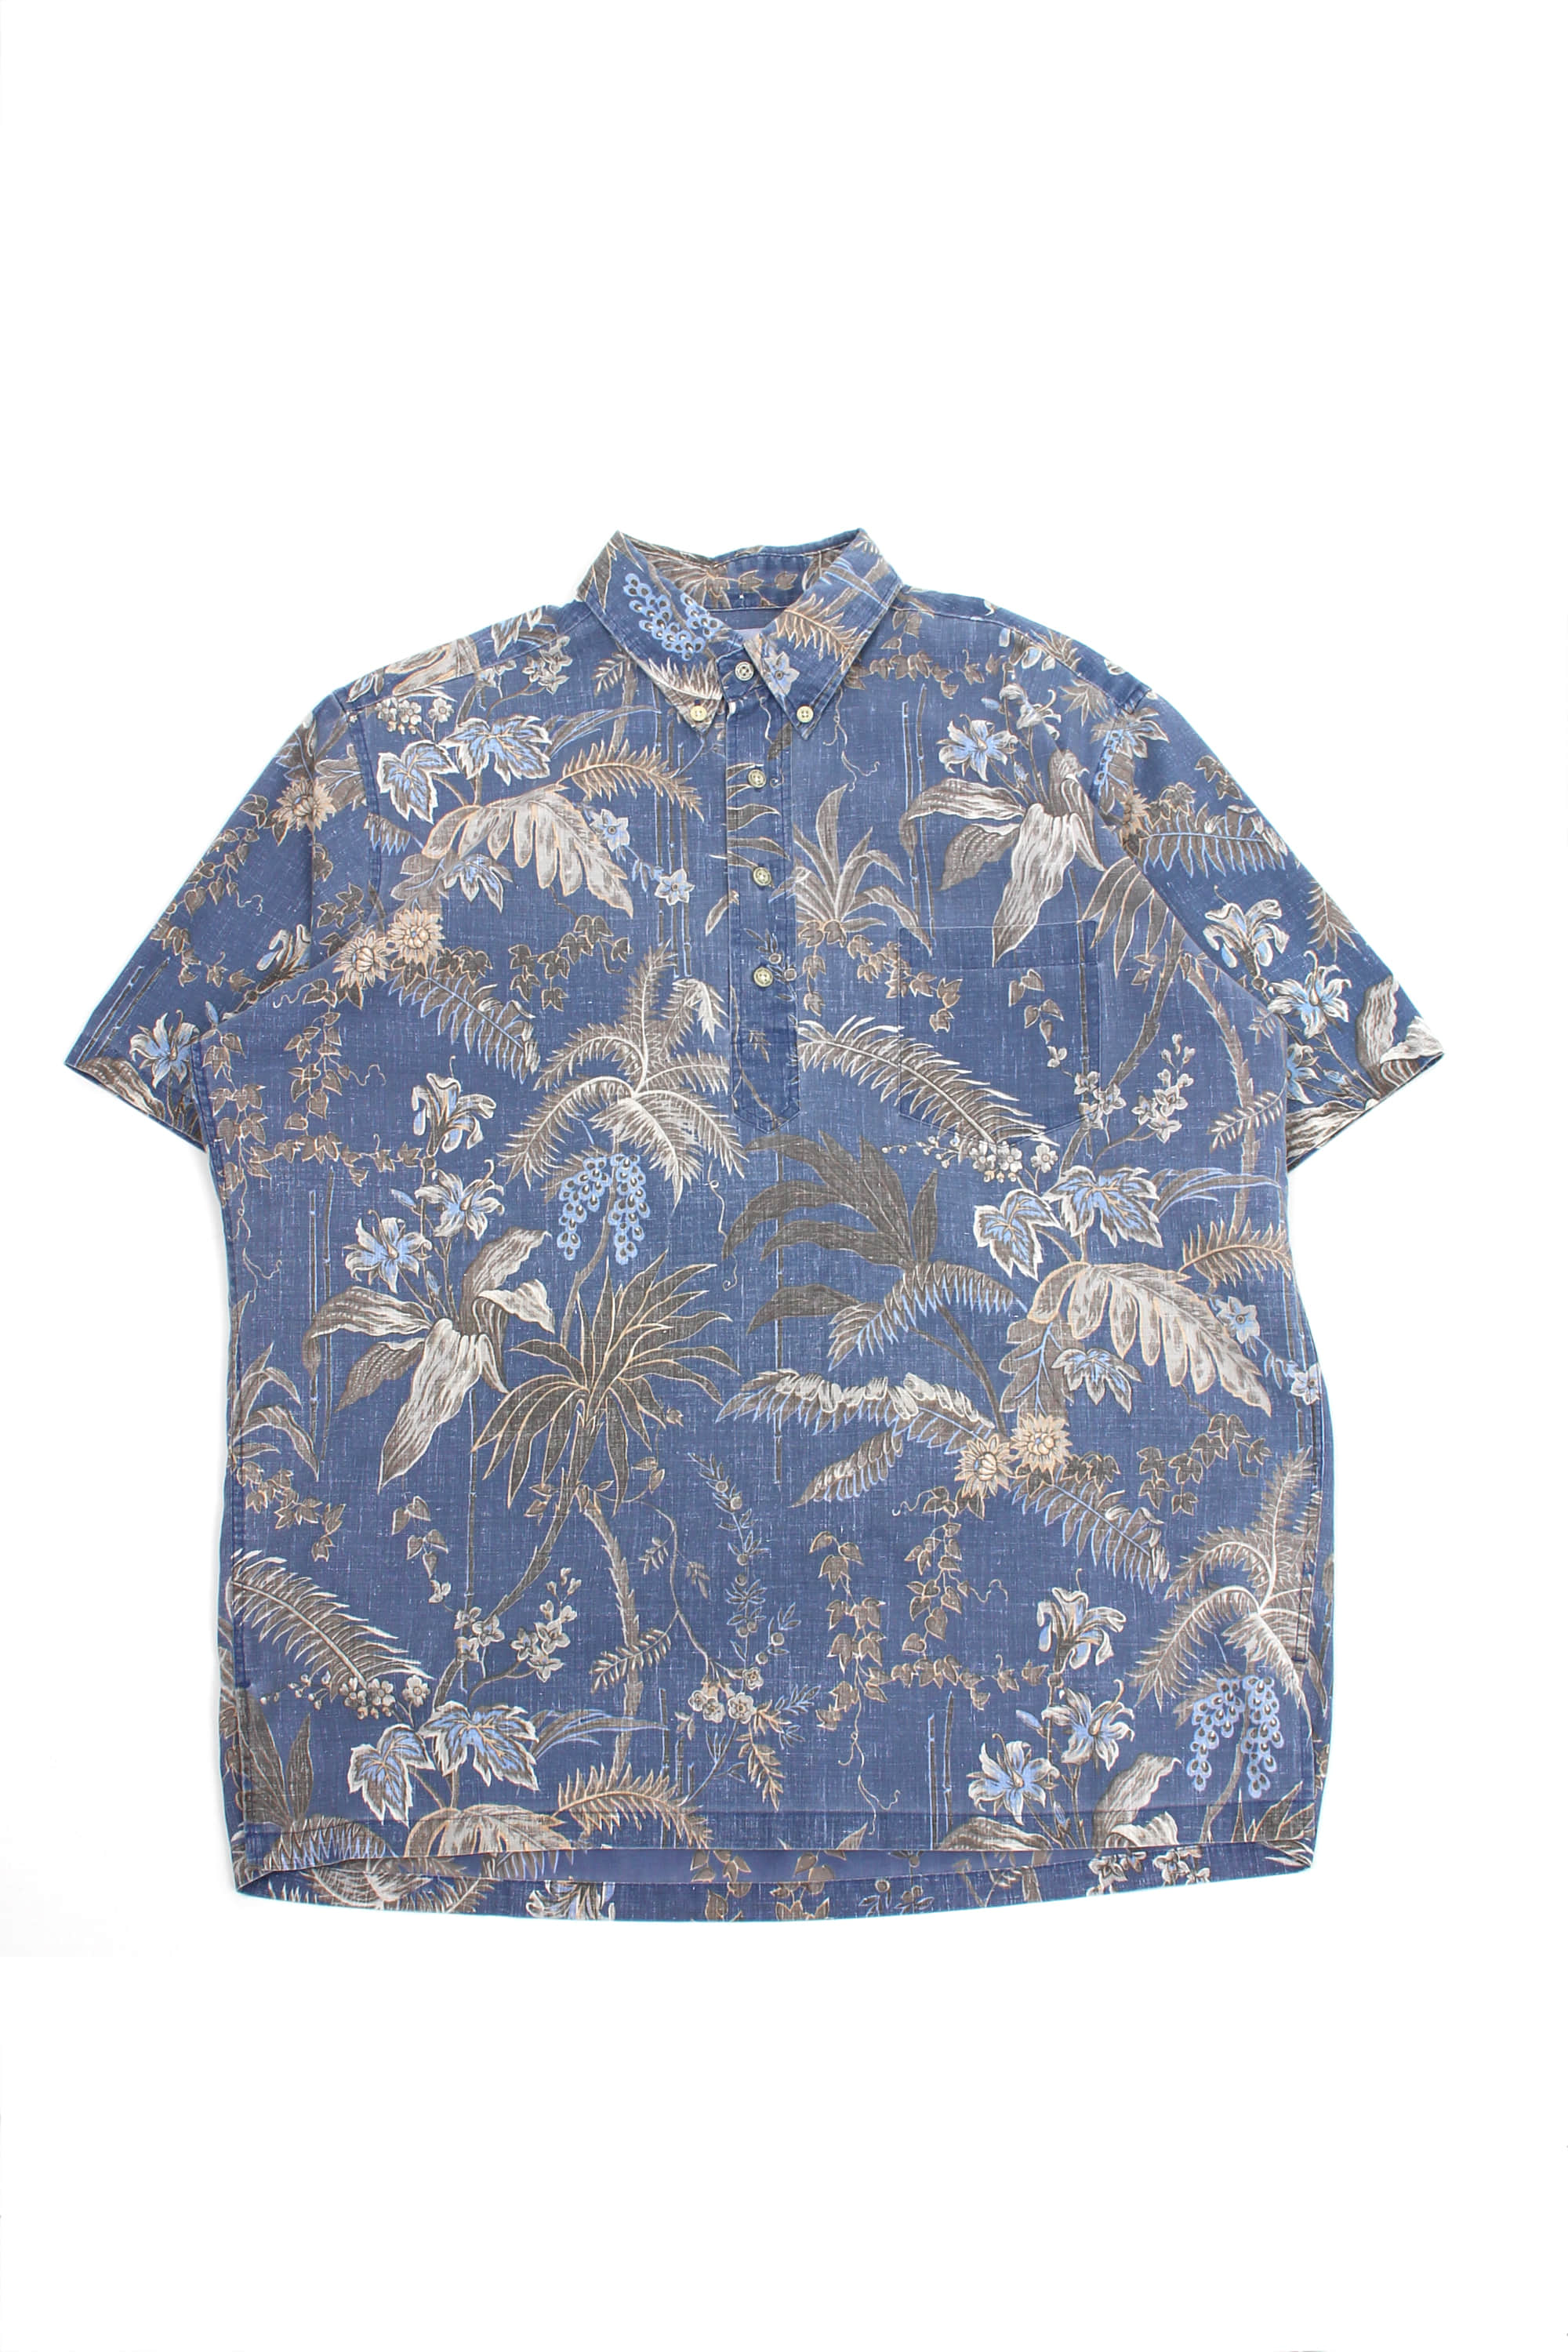 Reyn Spooner Aloha Shirts